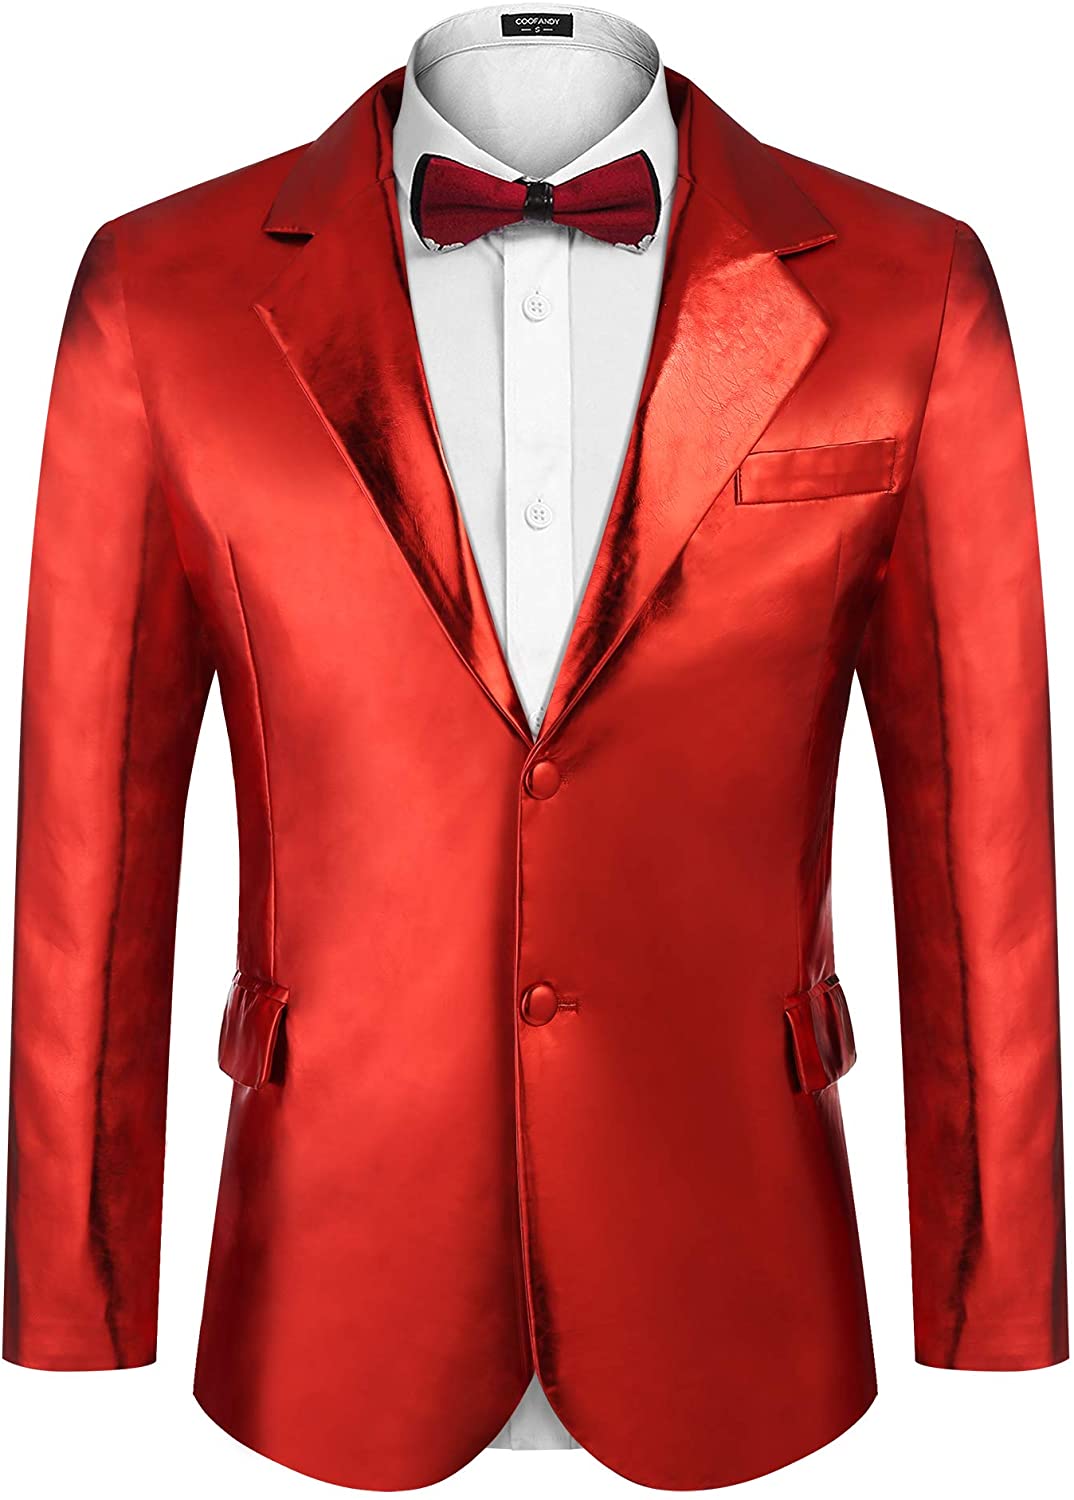 COOFANDY Men’s Fashion Suit Jacket Blazer Weddings Prom Party Dinner Tuxedo 